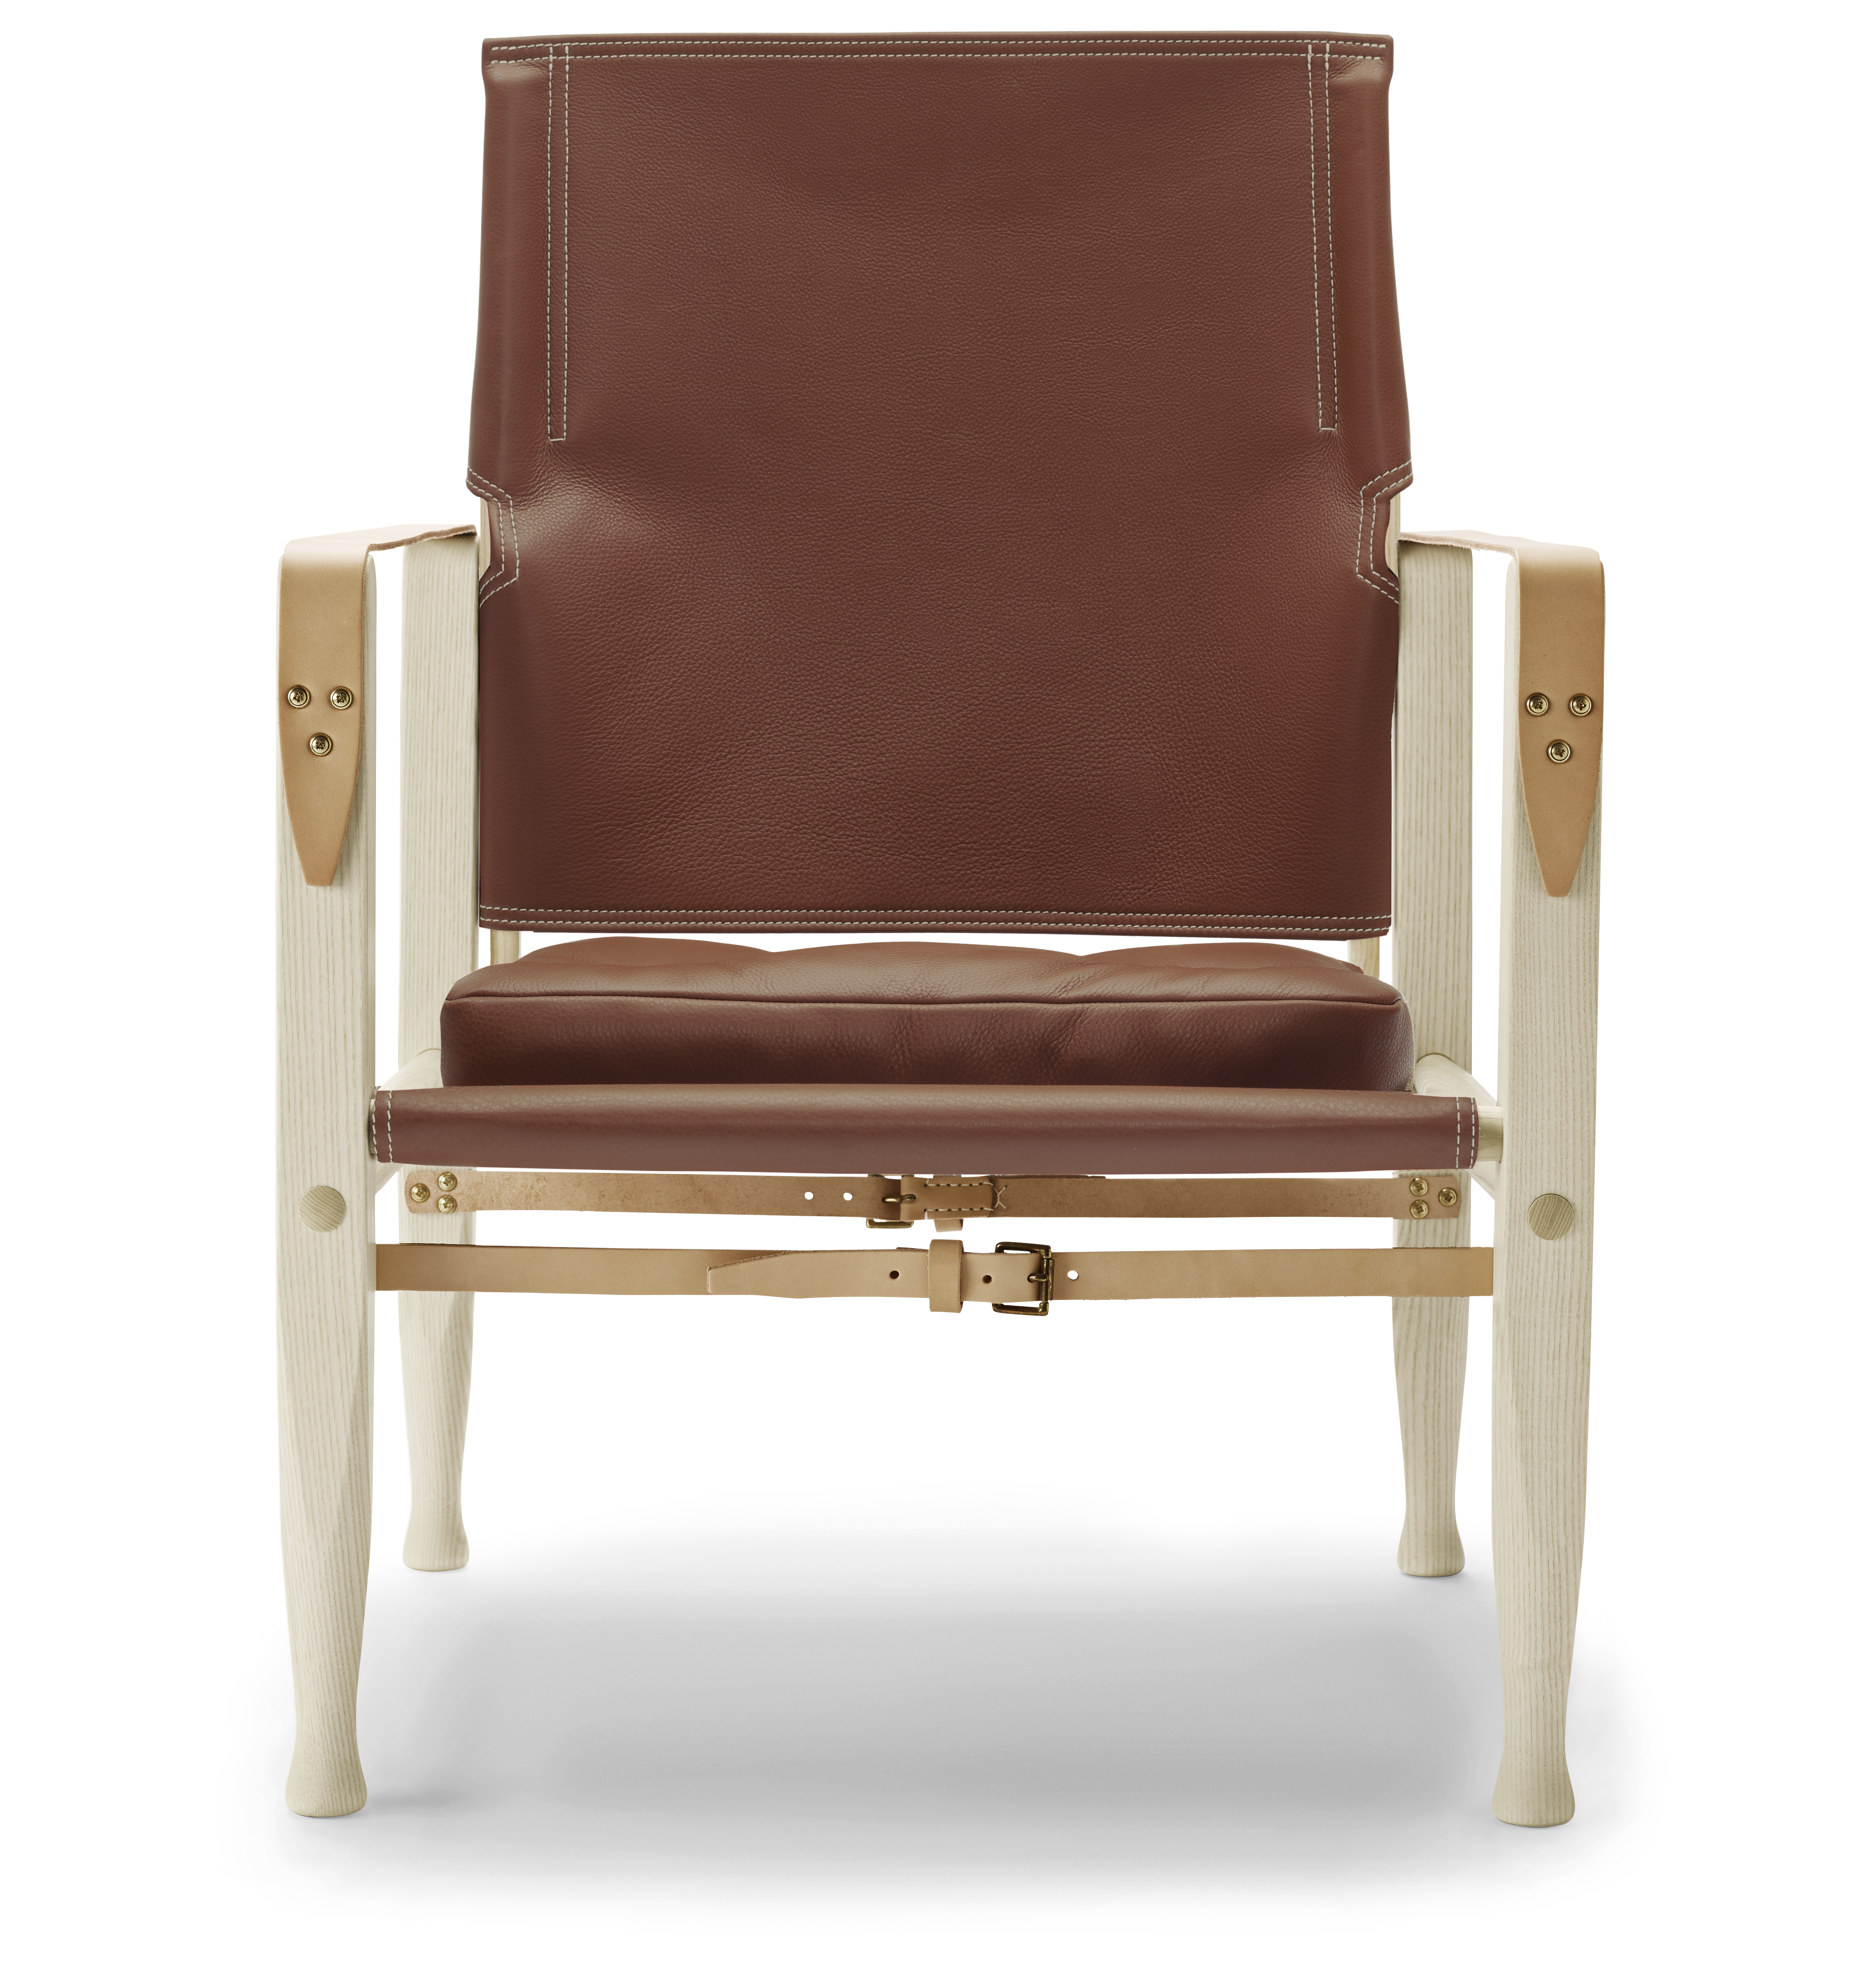 Kk47000 Safari Chair By Kaare Klint, Leather Safari Chair